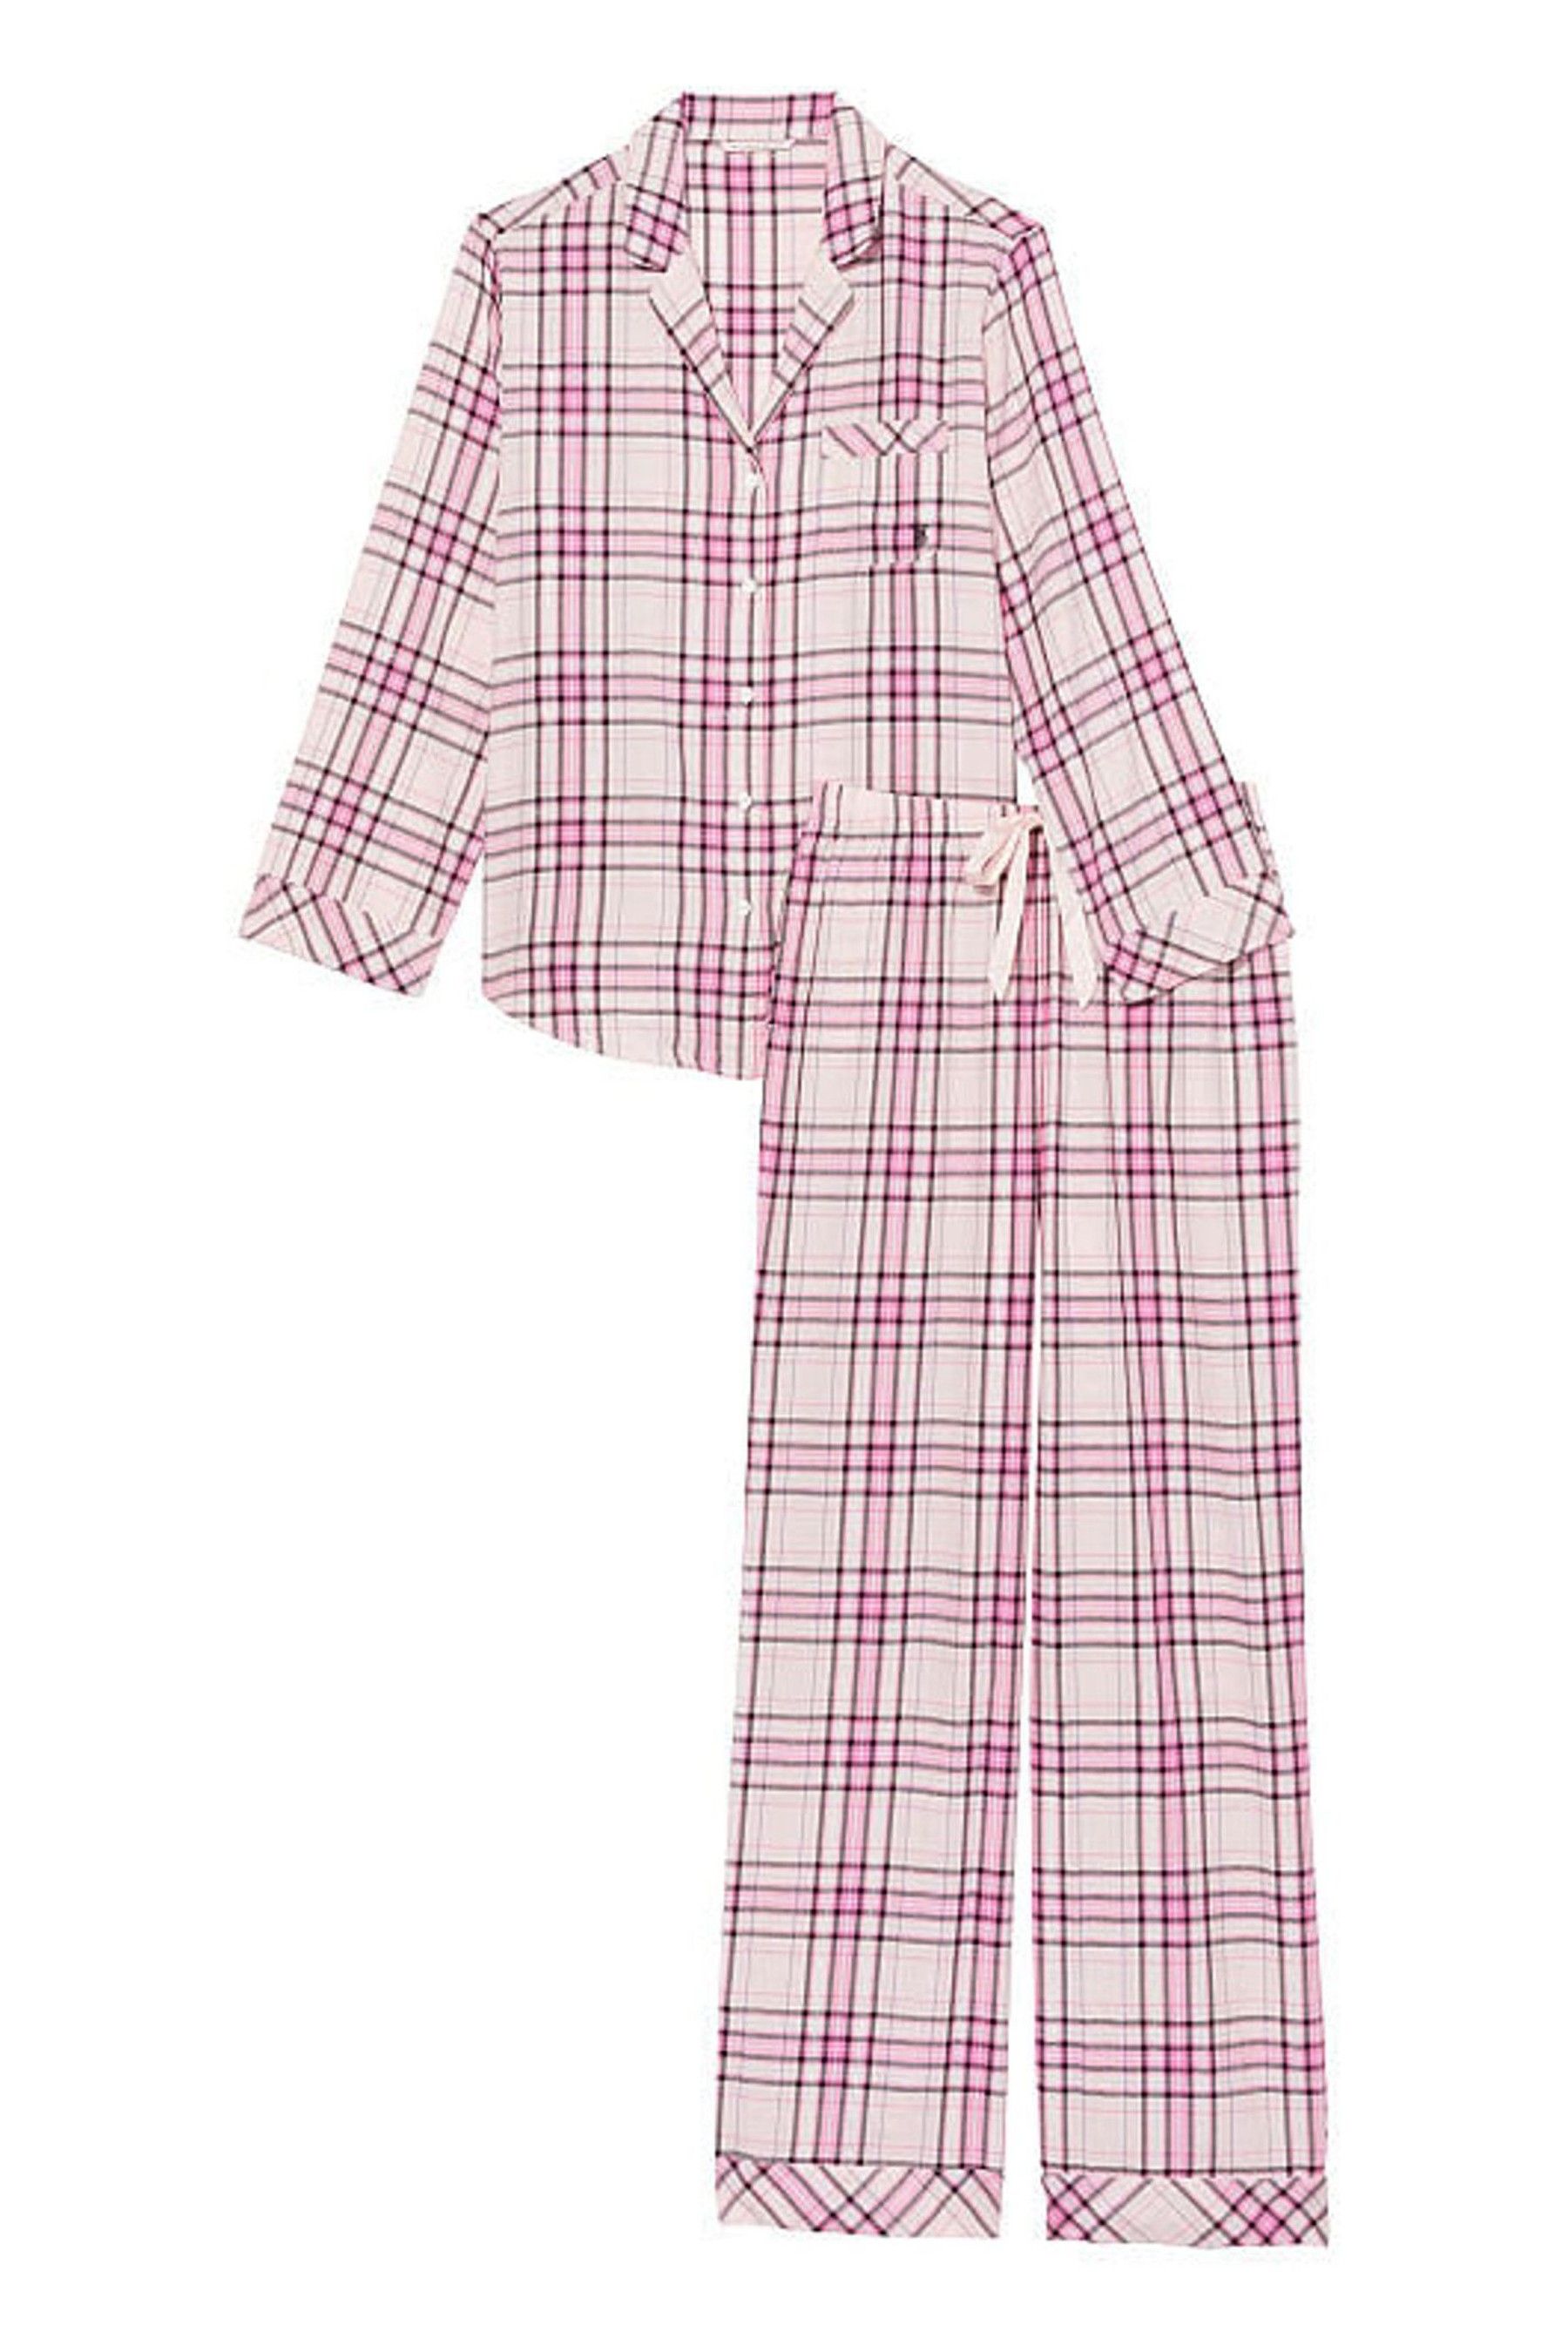 Buy Victoria's Secret Flannel Long Pyjamas from the Victoria's Secret ...